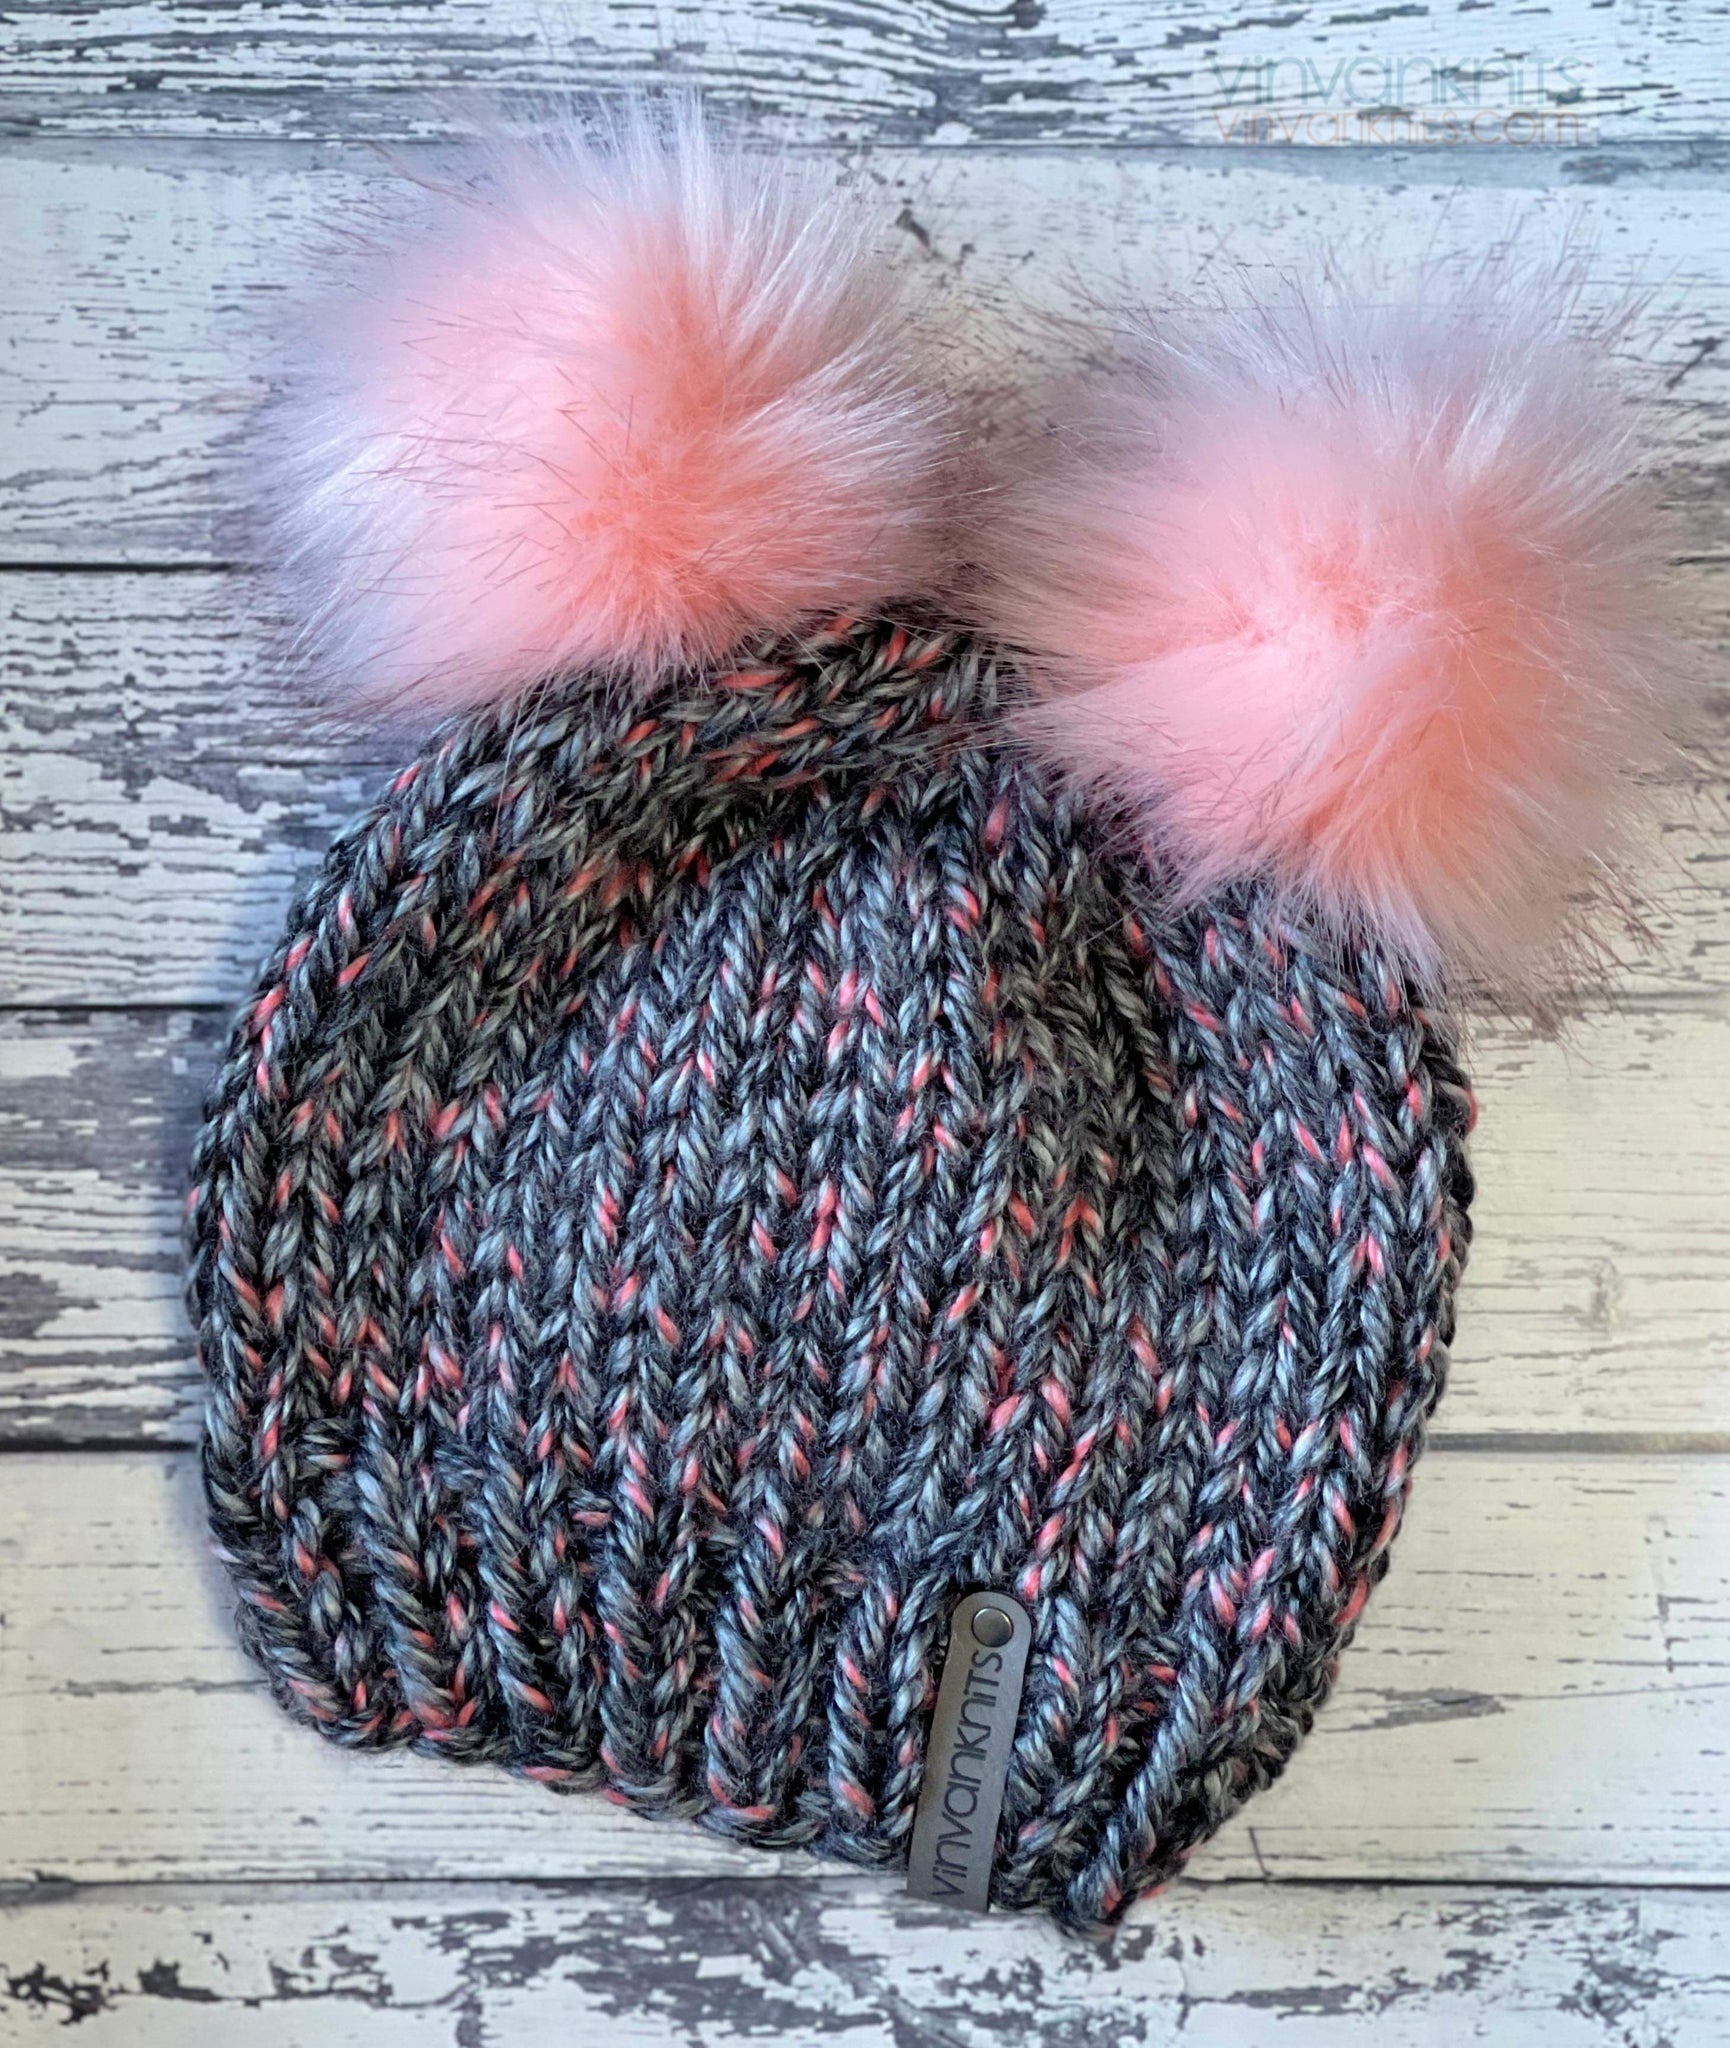 No Sew Leather Tags (Knitting or Crochet) – Alight Custom